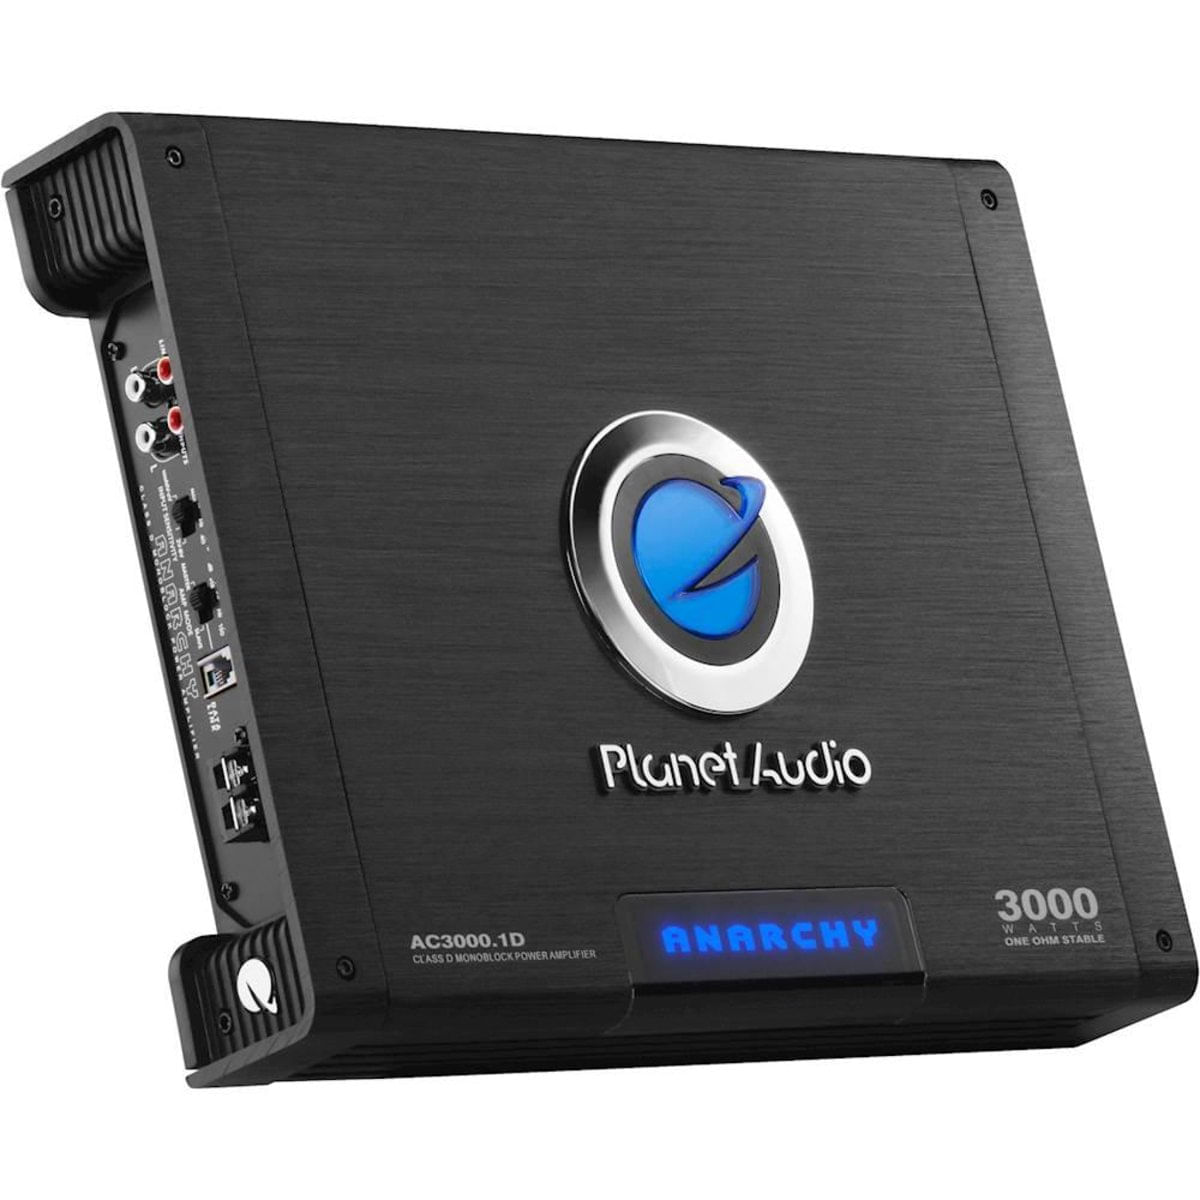 Amplificador Automotivo Planet Audio Anarchy 3000W Class Mono Mosfet -Ac3000.1D Preto